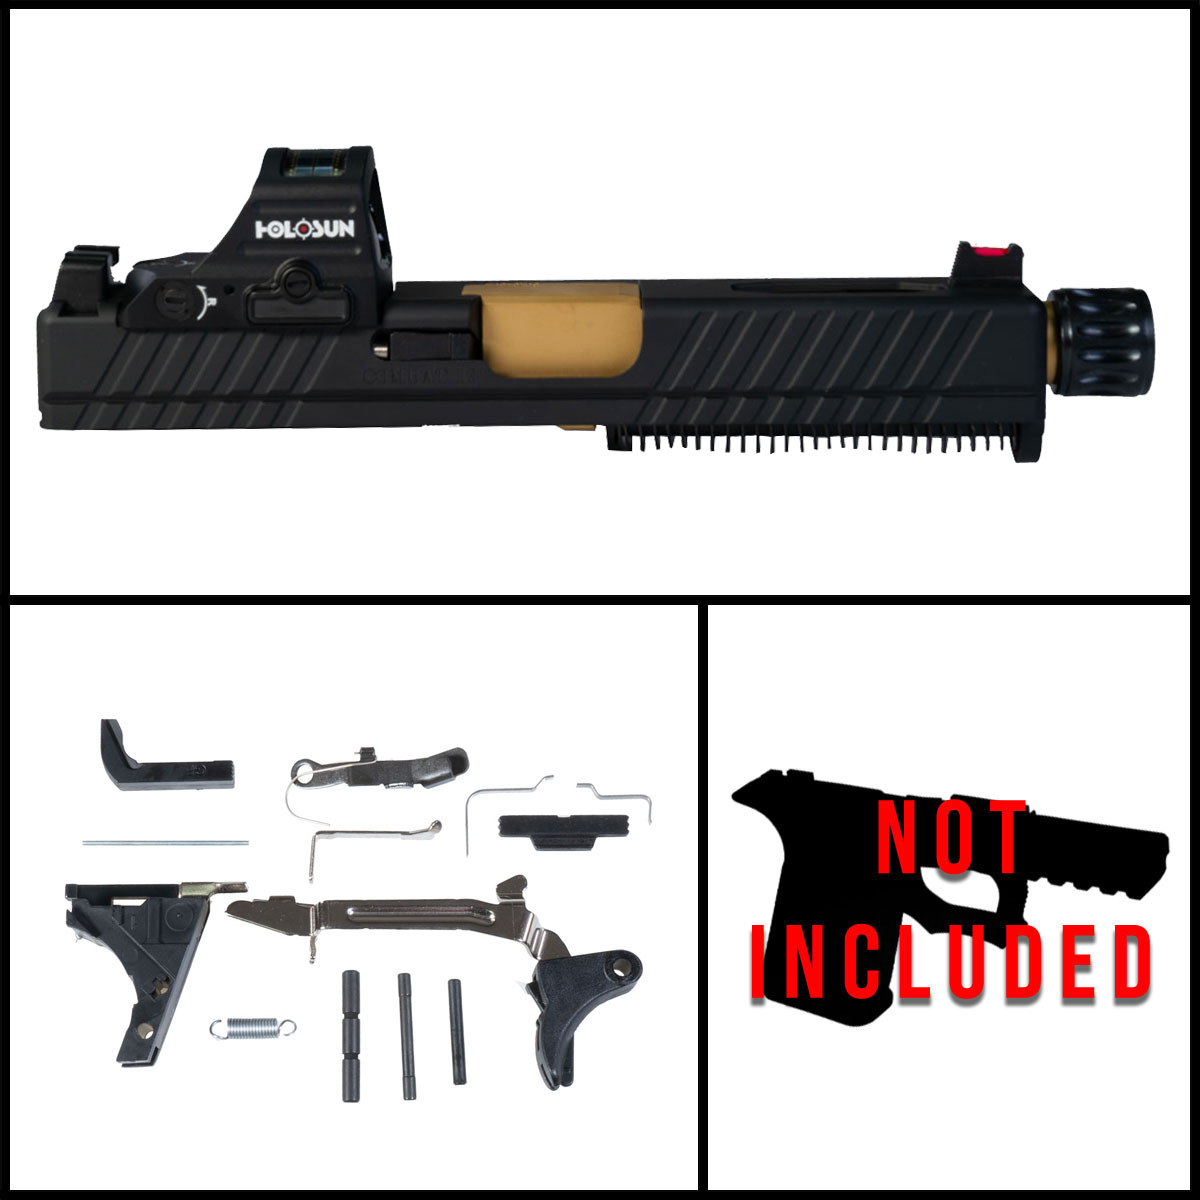 DTT 'Pax Vobiscum w/ HS507C-X2 Red Dot' 9mm Full Pistol Build Kit (Everything Minus Frame) - Glock 19 Gen 1-3 Compatible